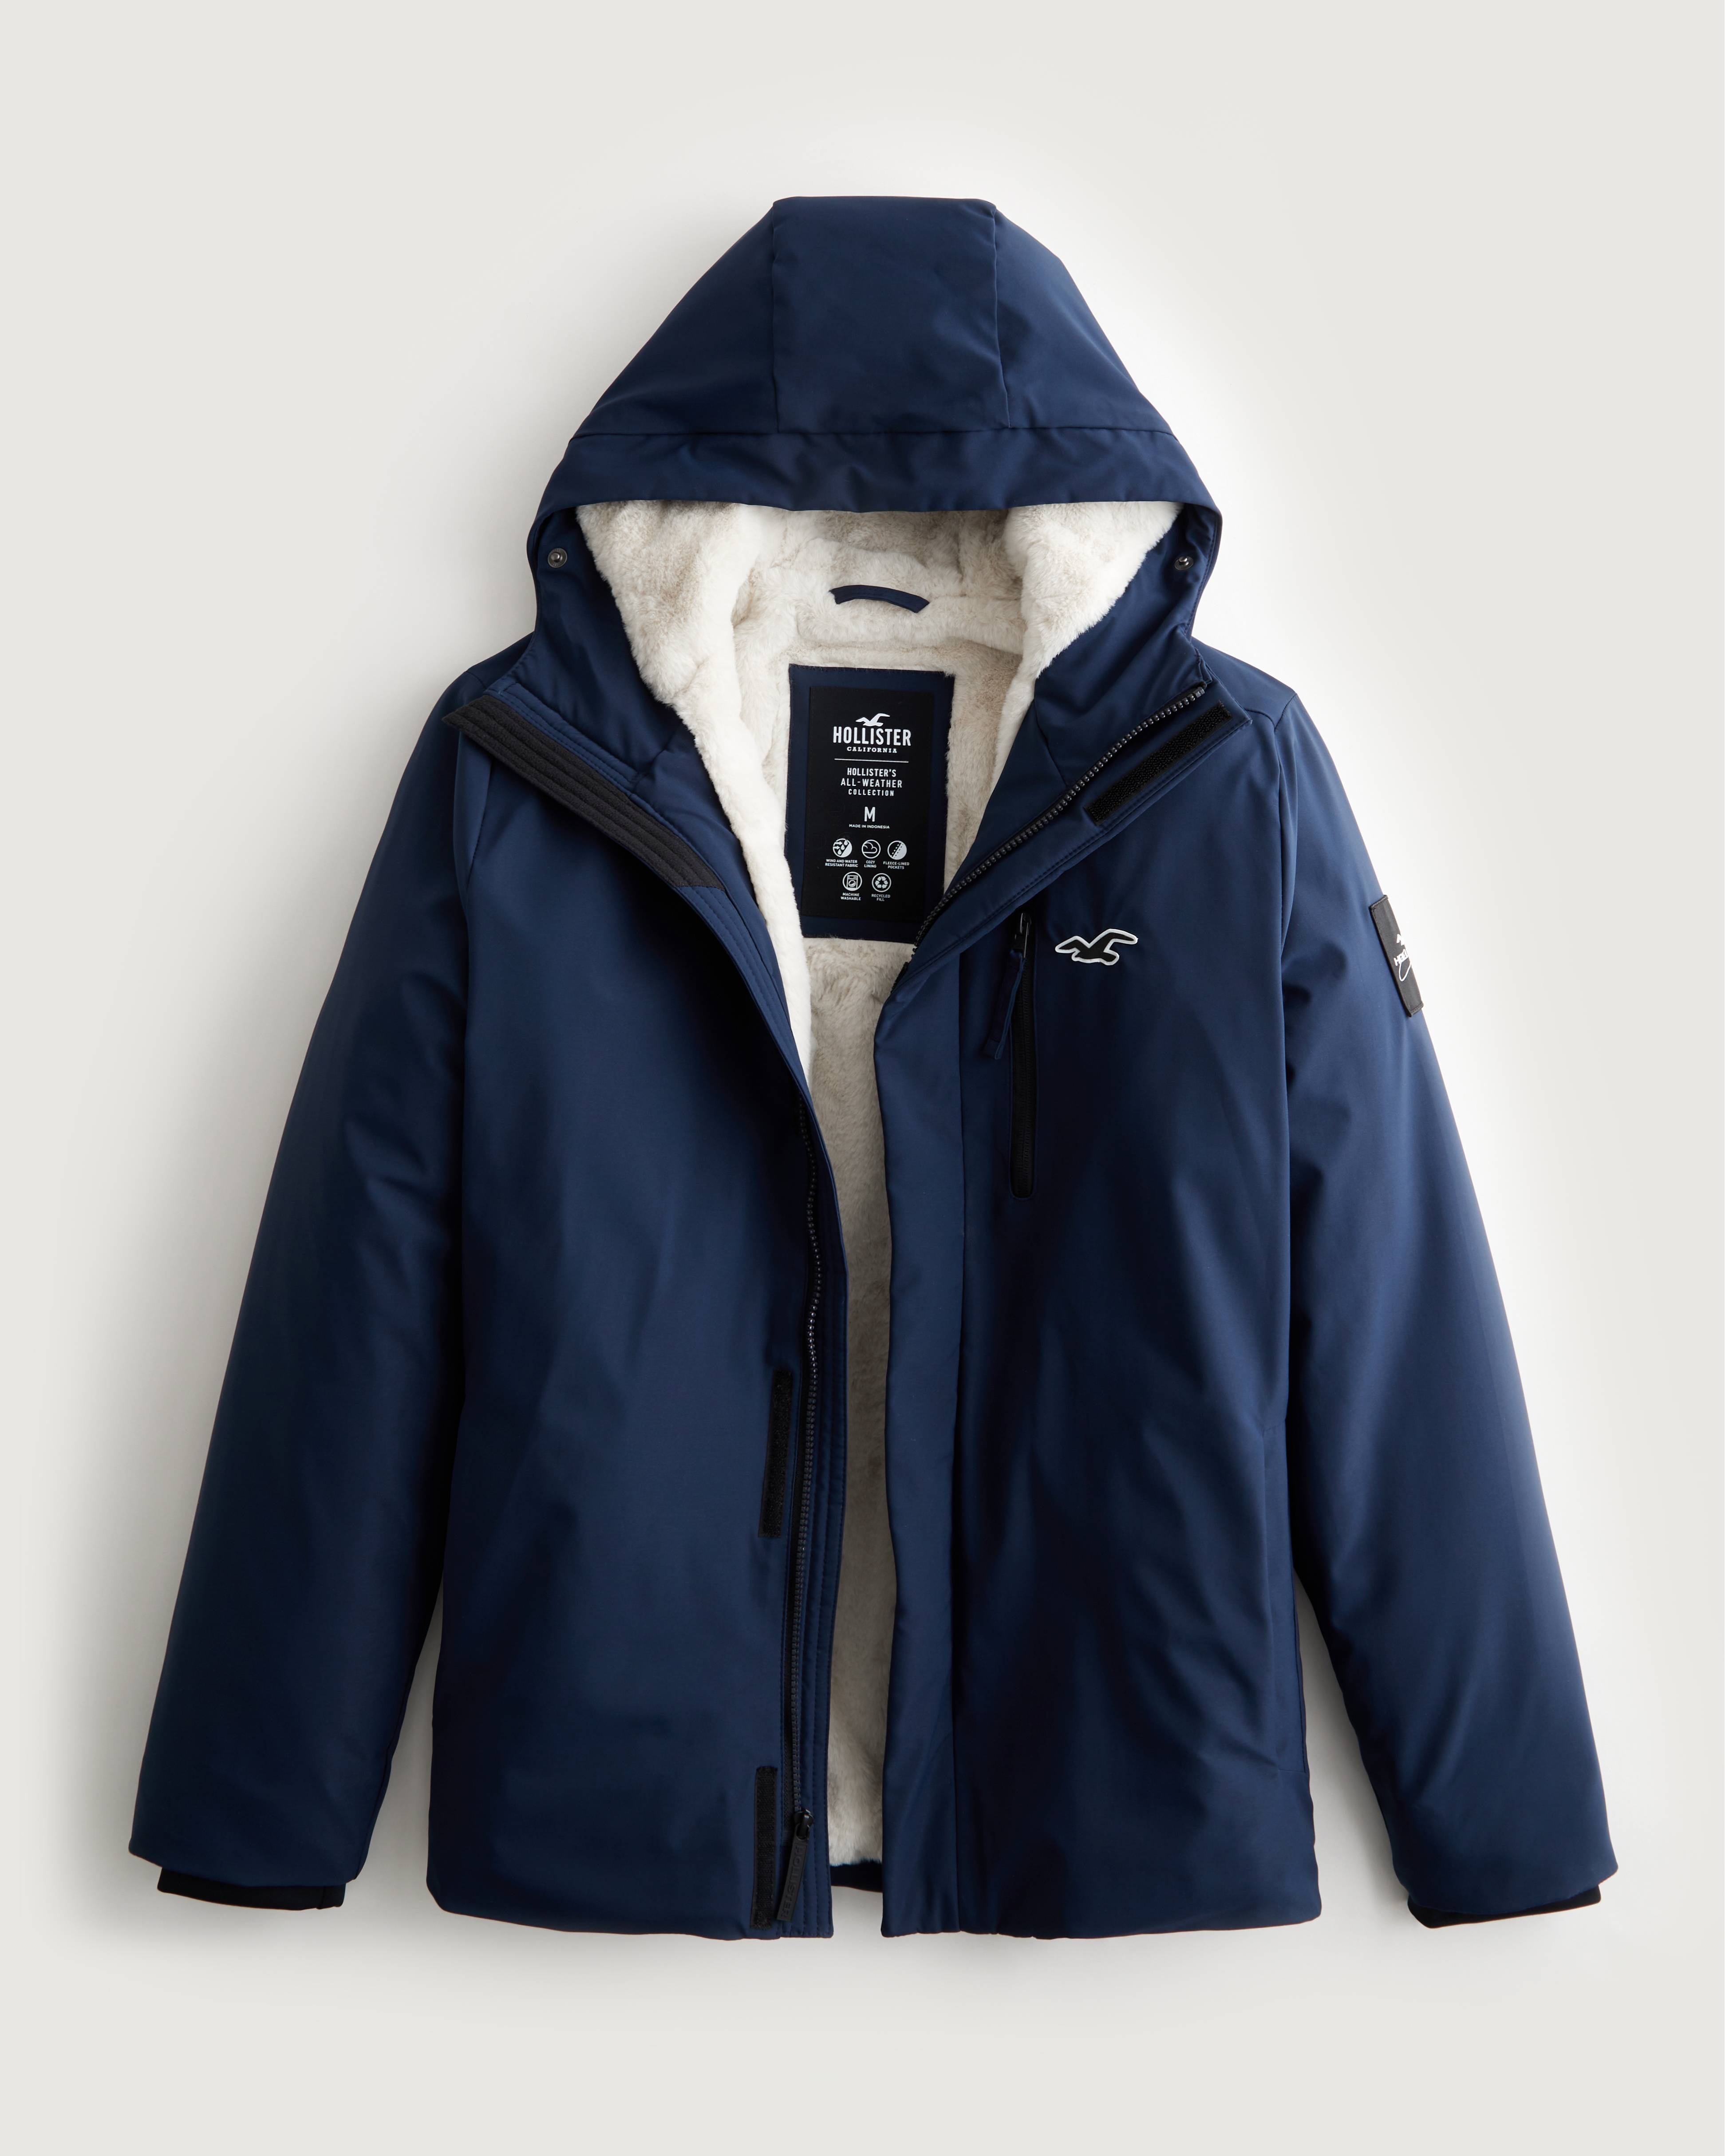 Hollister, Jackets & Coats, Hollister California All Weather Fleece Lined  Jacket Size Medium